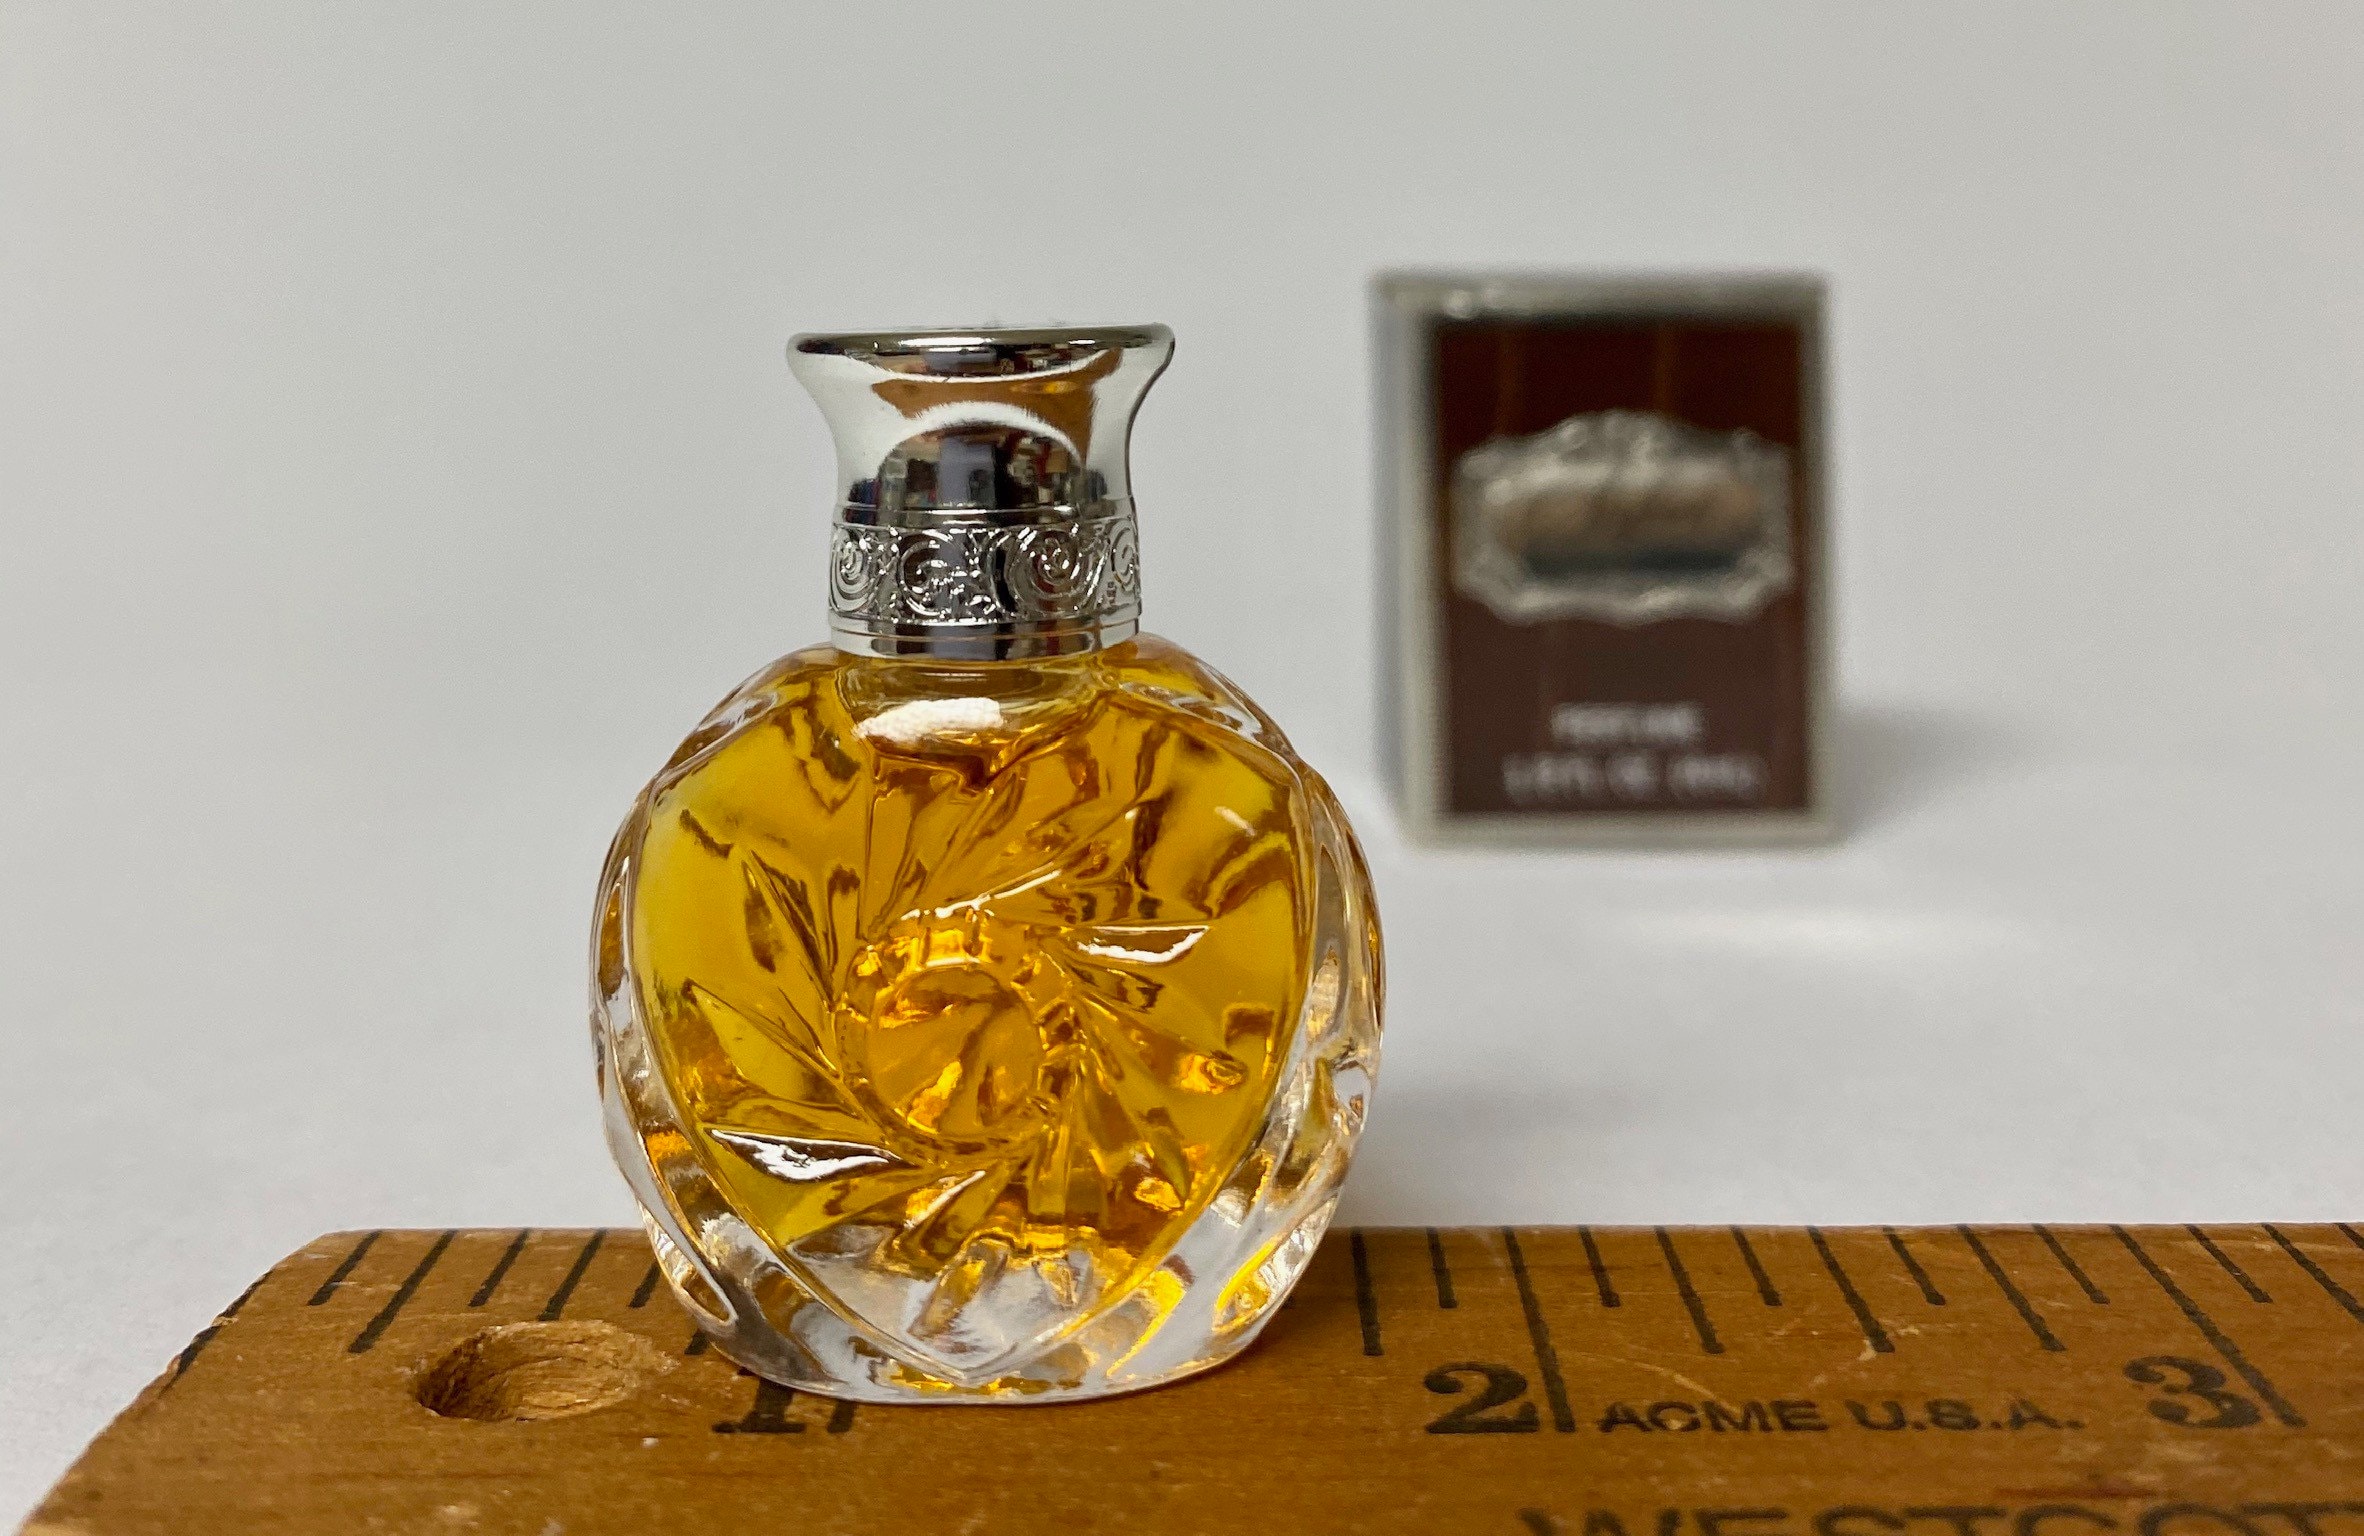 Bal à Versailles Jean Desprez perfume - a fragrance for women 1962